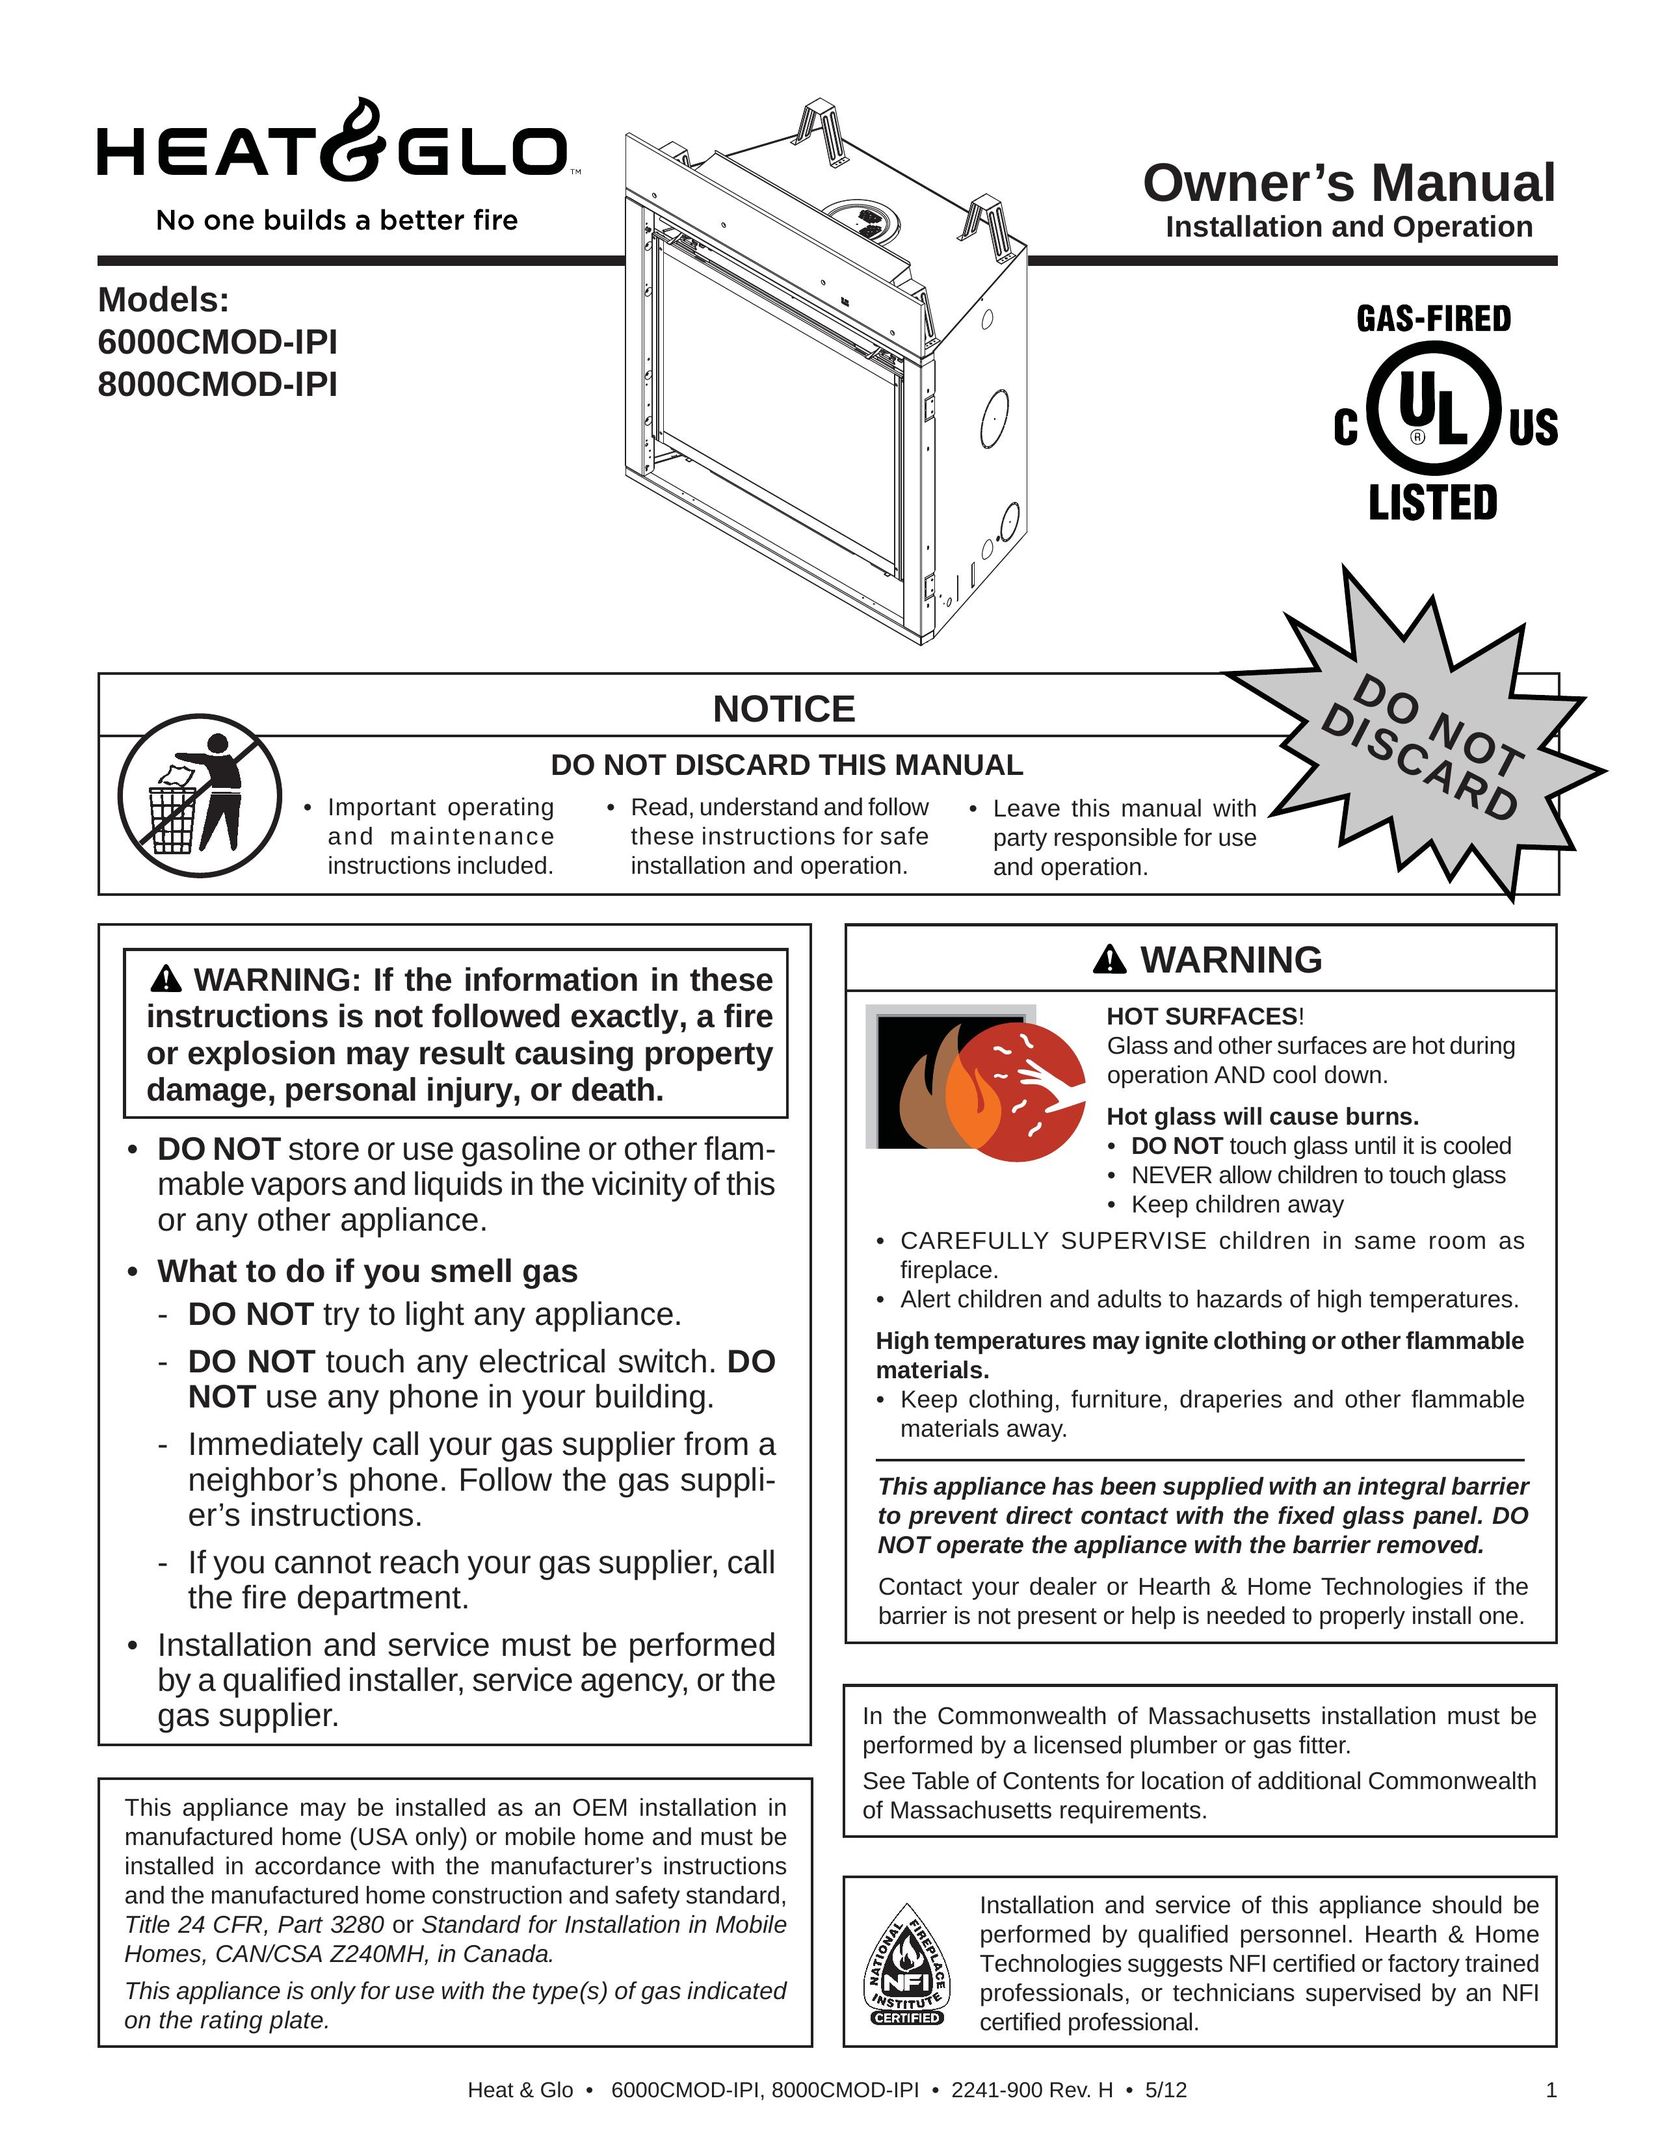 Heat & Glo LifeStyle 6000CMOD-IPI Indoor Fireplace User Manual